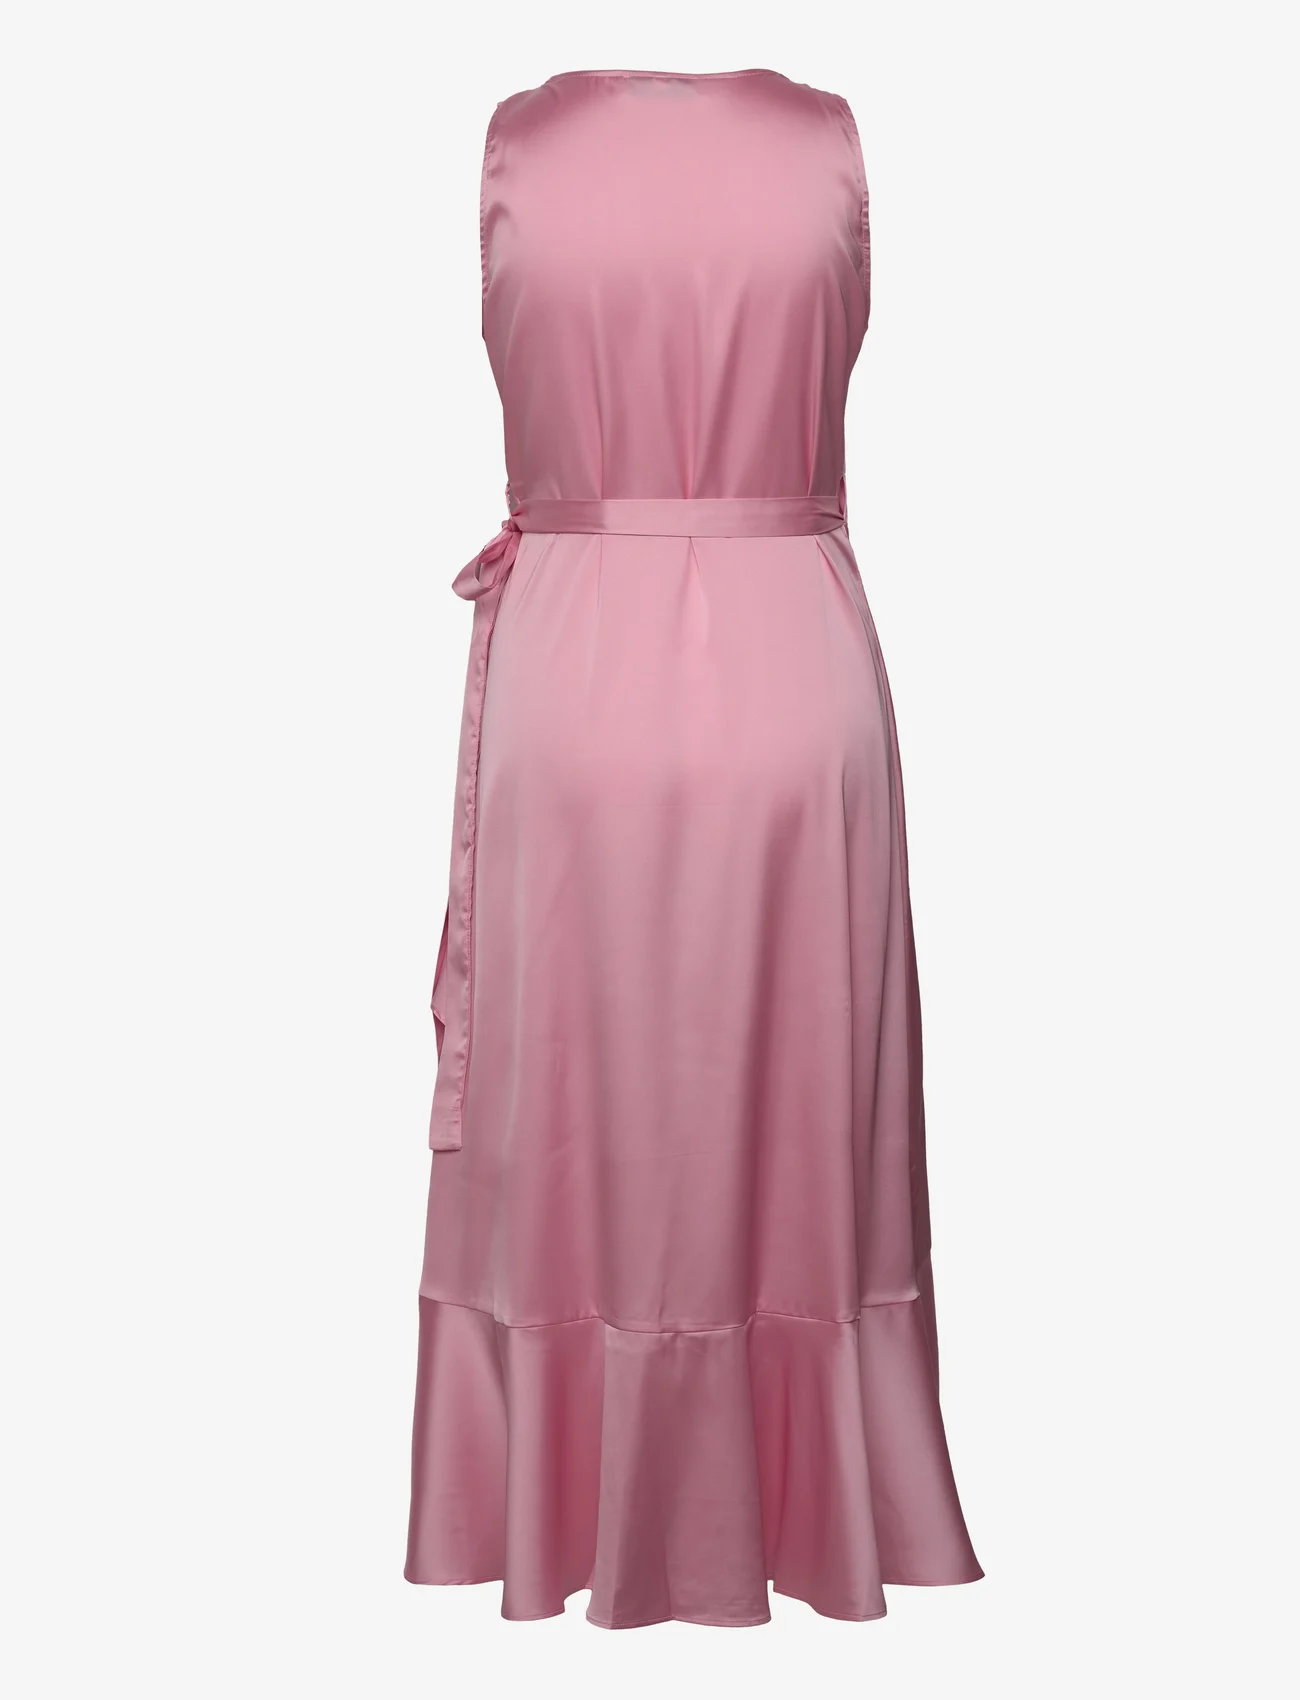 A-View - Camilji sleeveless dress - kleitas ar pārlikumu - rose - 1